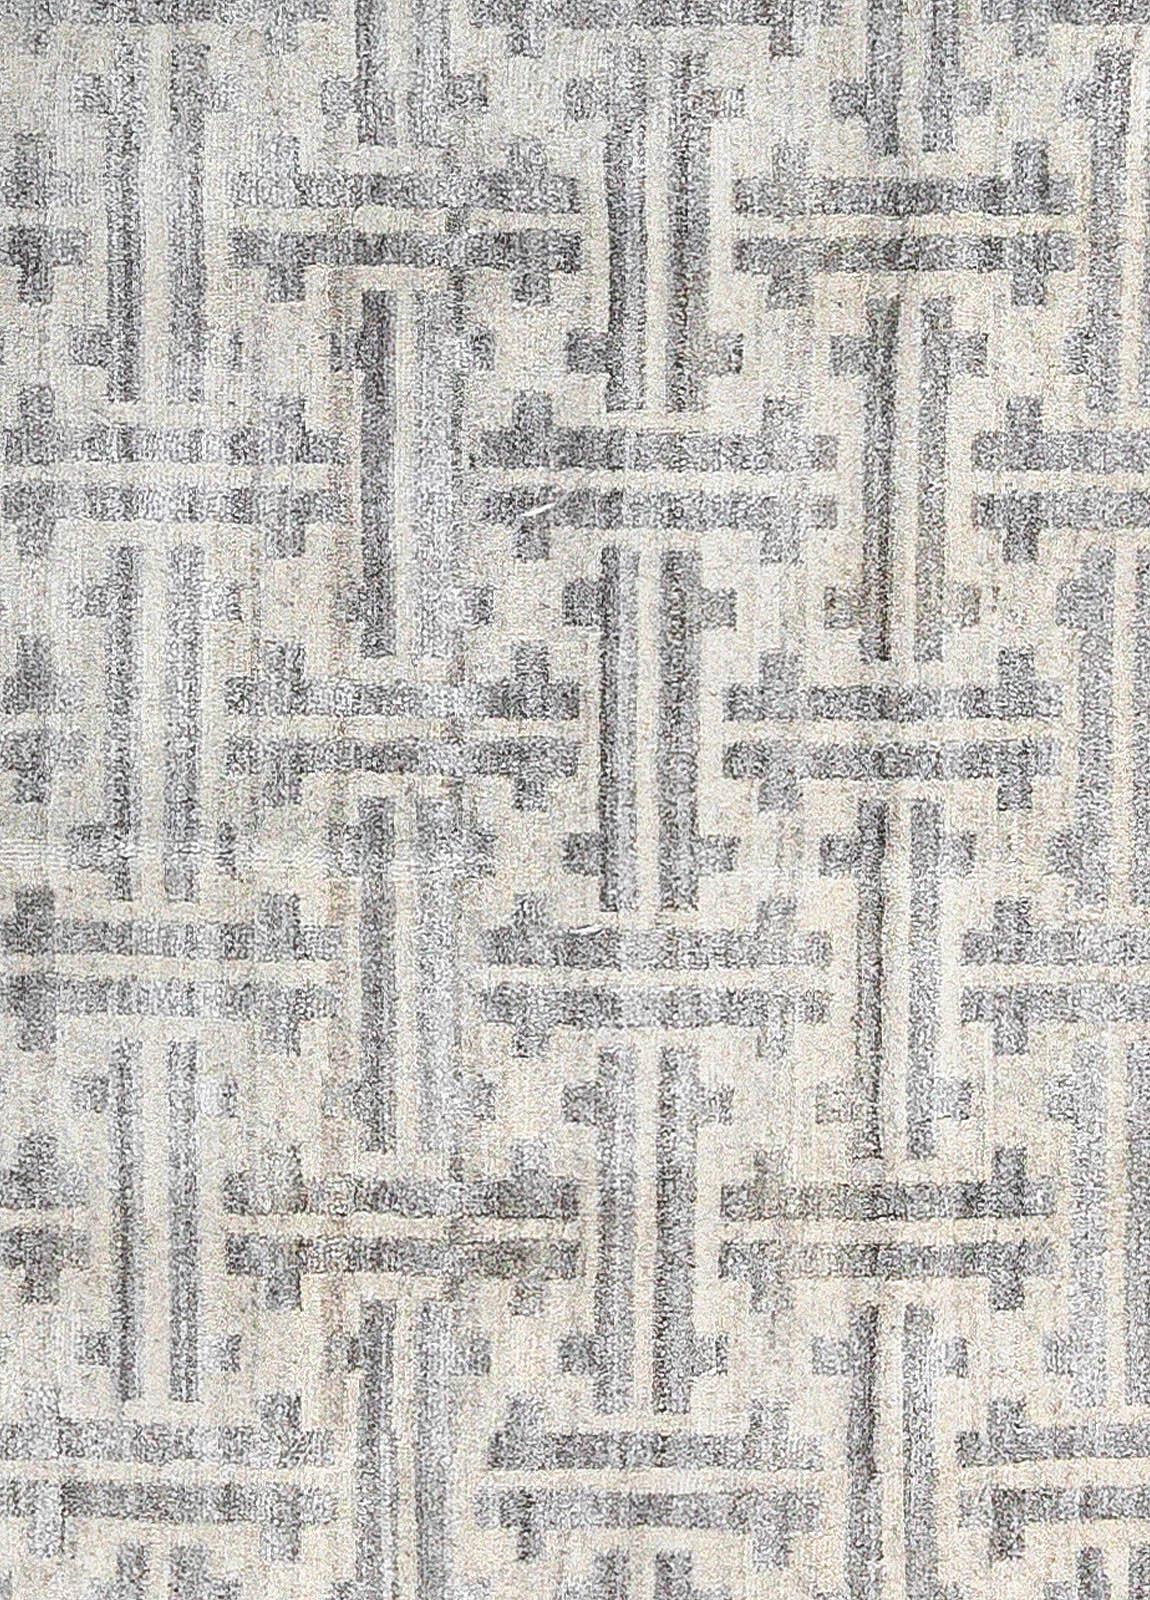 Contemporary grey terra rug in natural wool by Doris Leslie Blau.
Size: 8'0